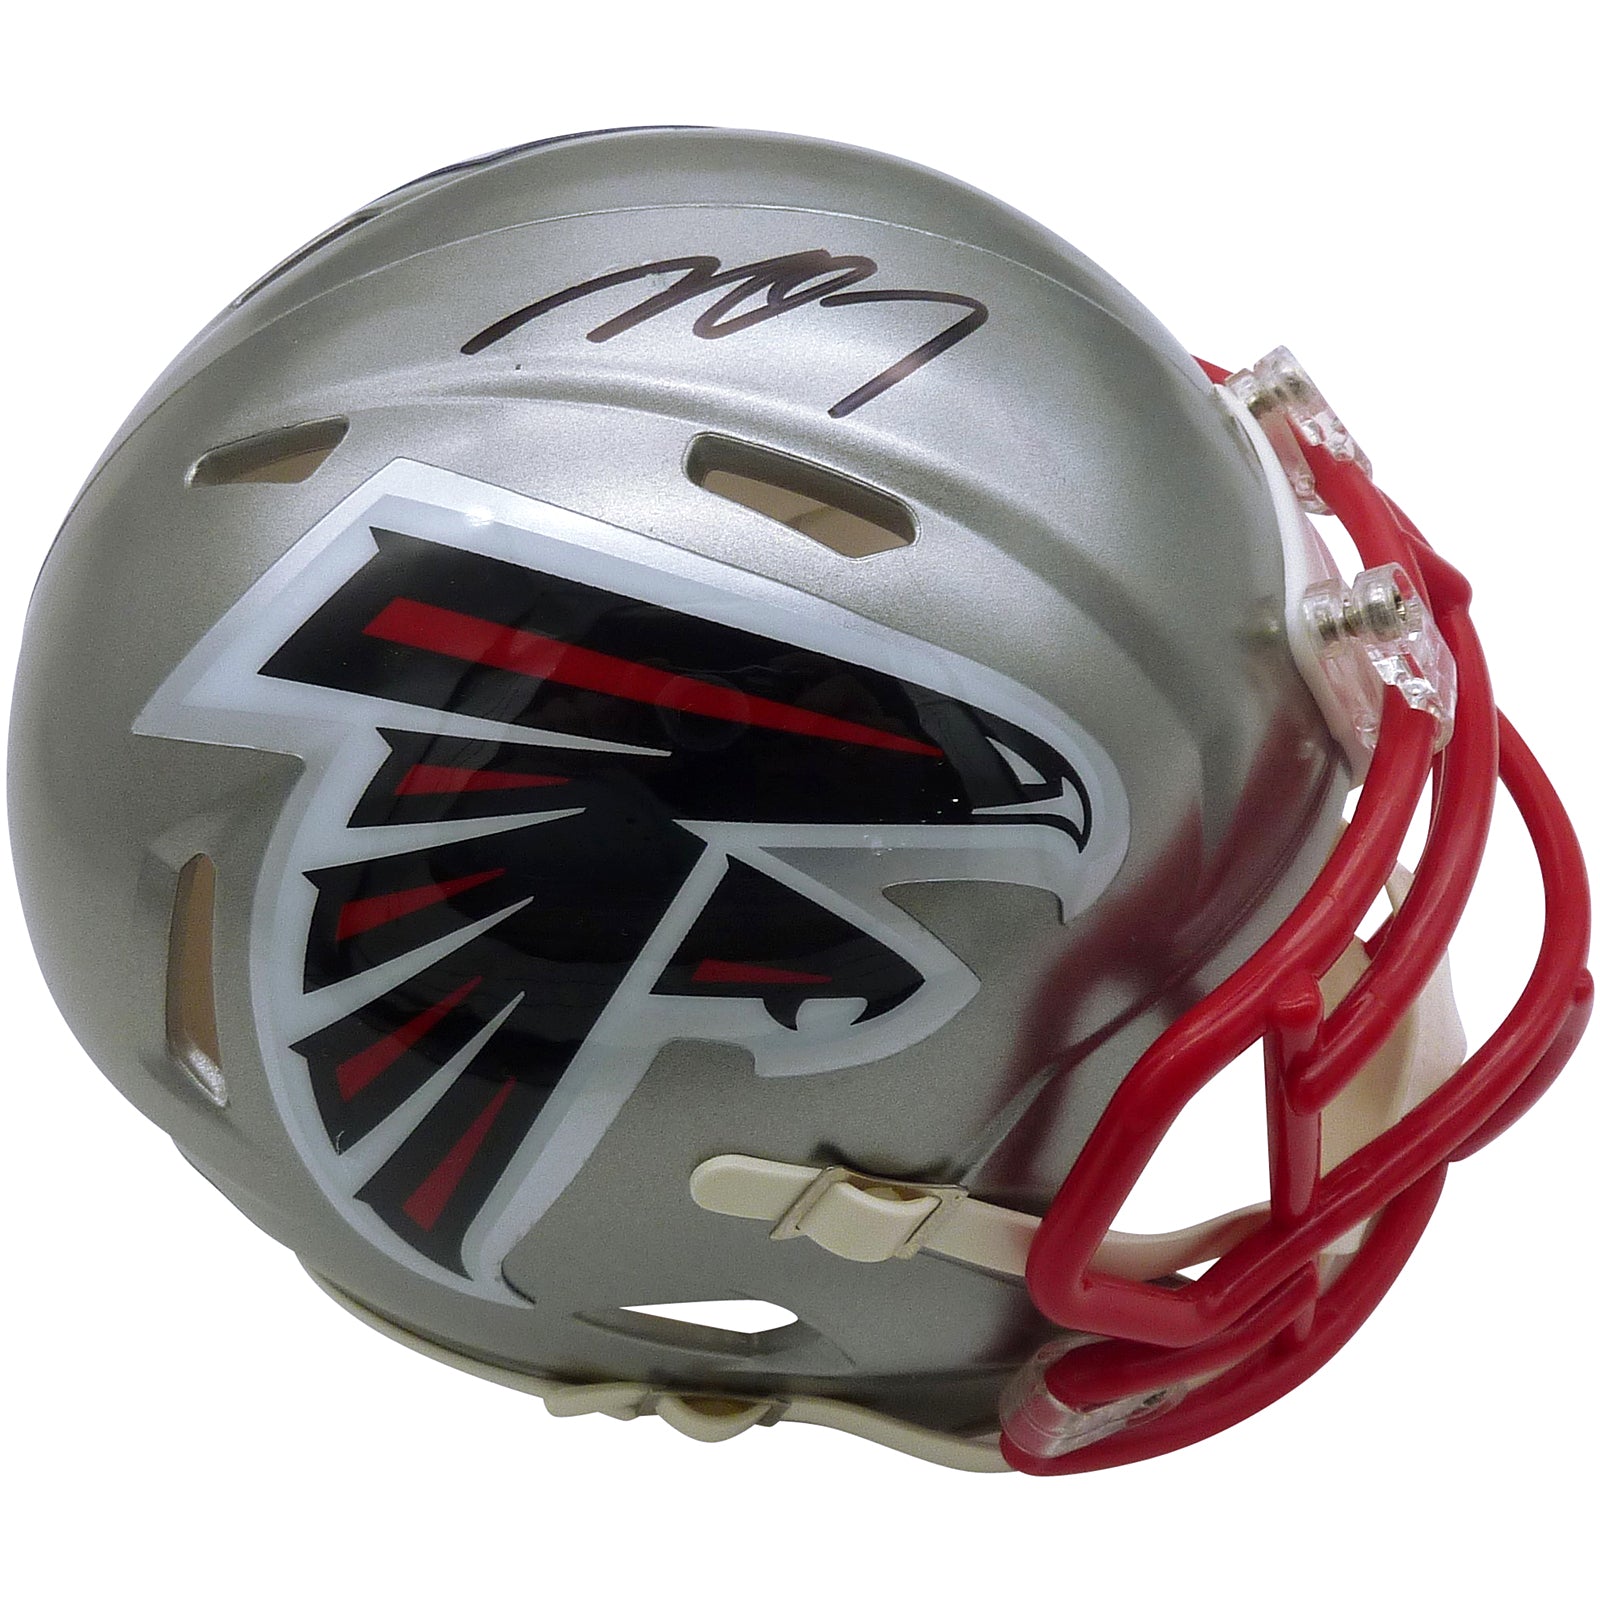 Michael Vick Autographed Atlanta Falcons (FLASH Alternate) Mini Helmet - JSA